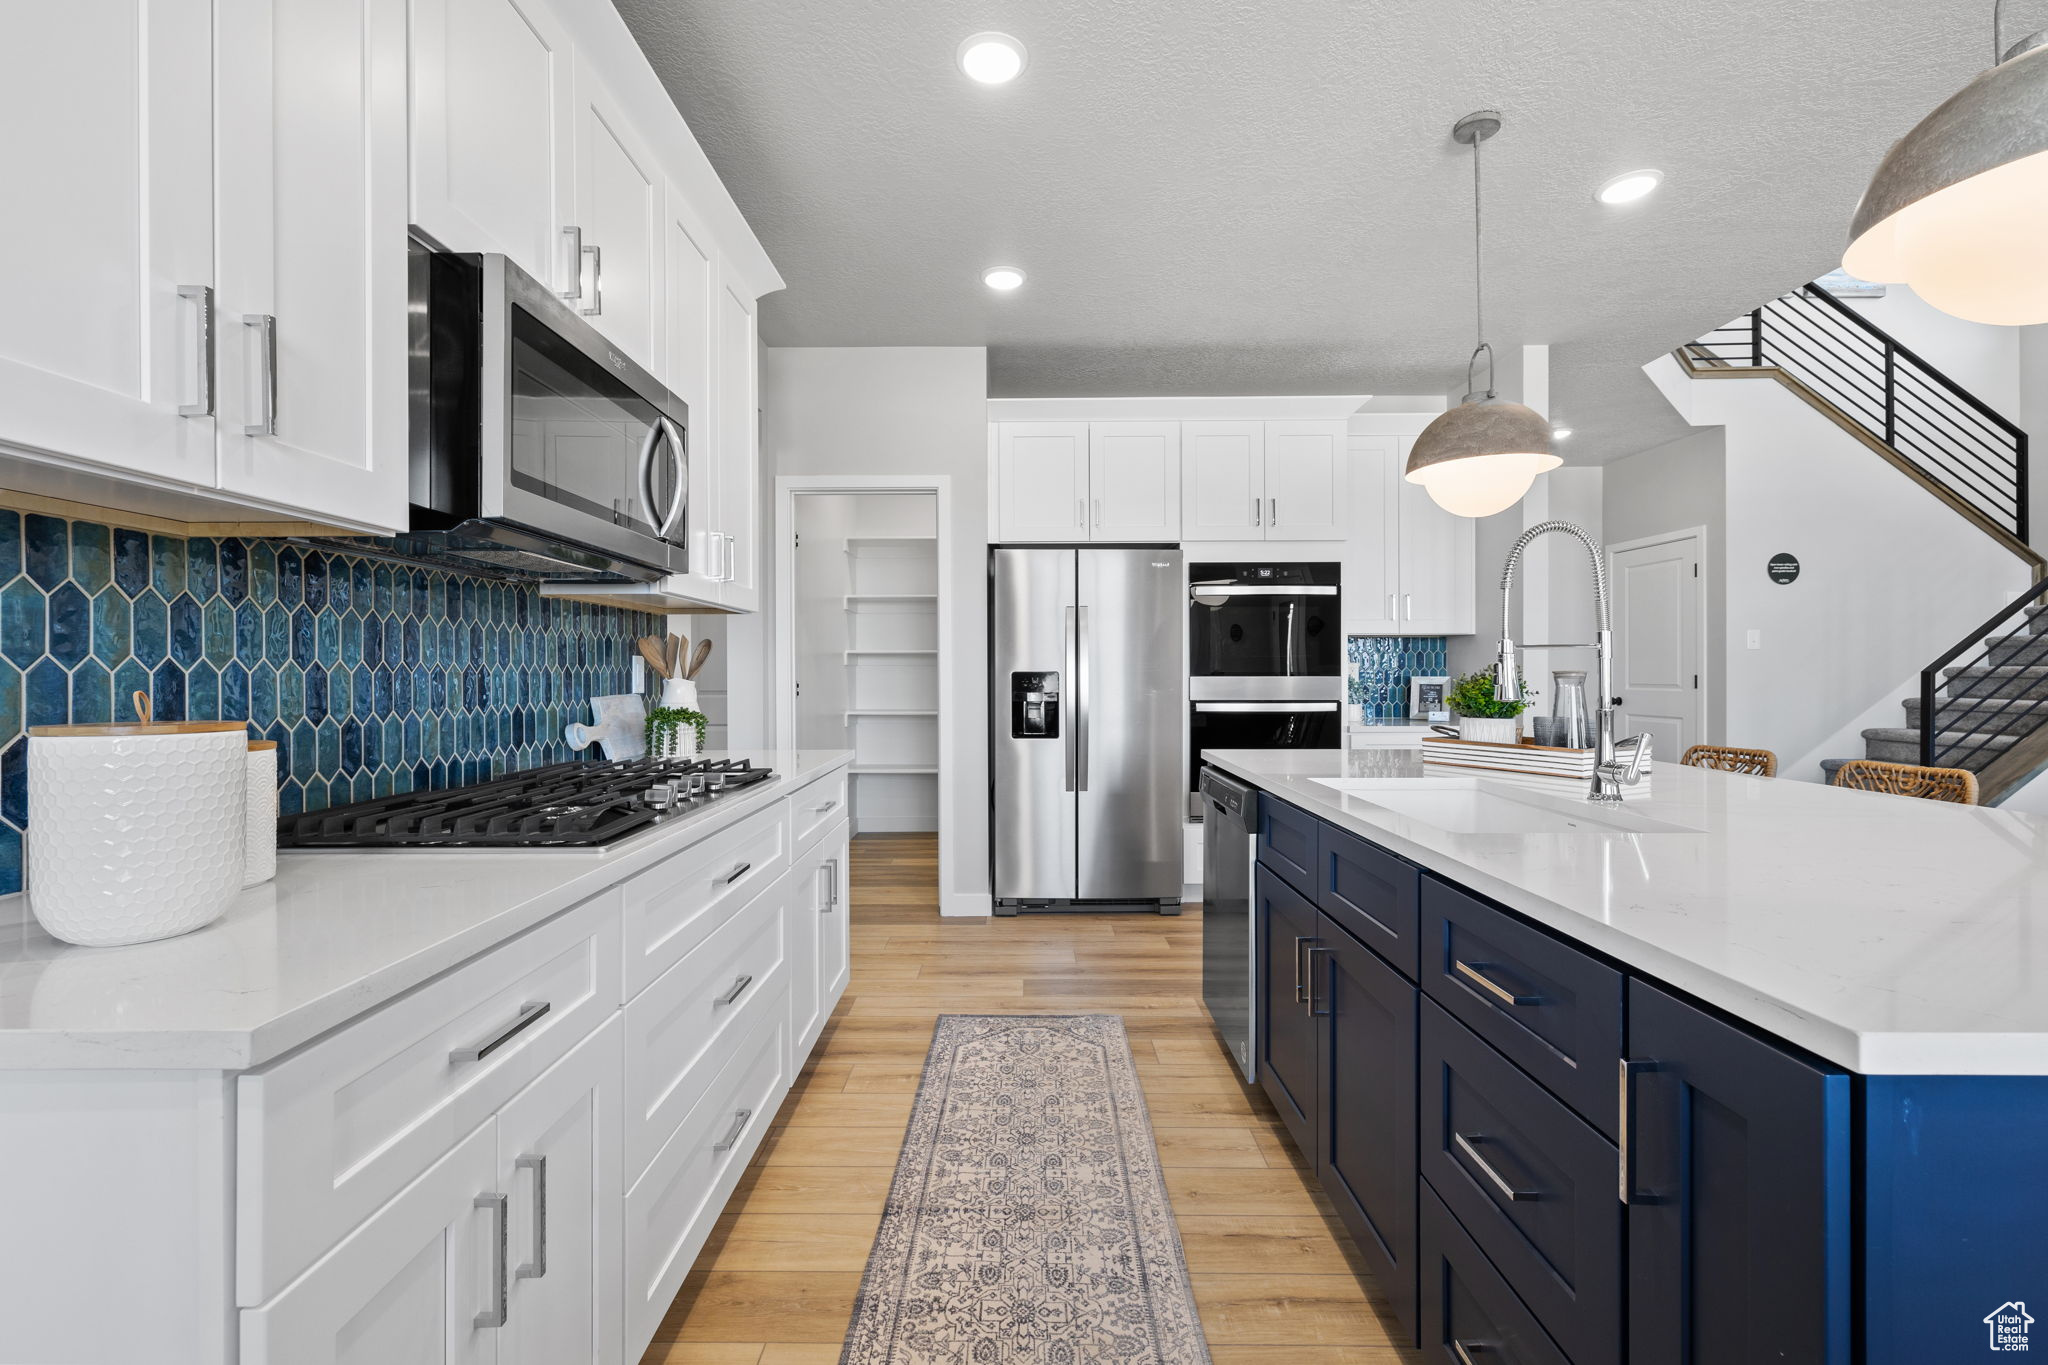 Kitchen featuring pendant lighting, white cabinets, backsplash, light hardwood / wood-style floors, and stainless steel appliances